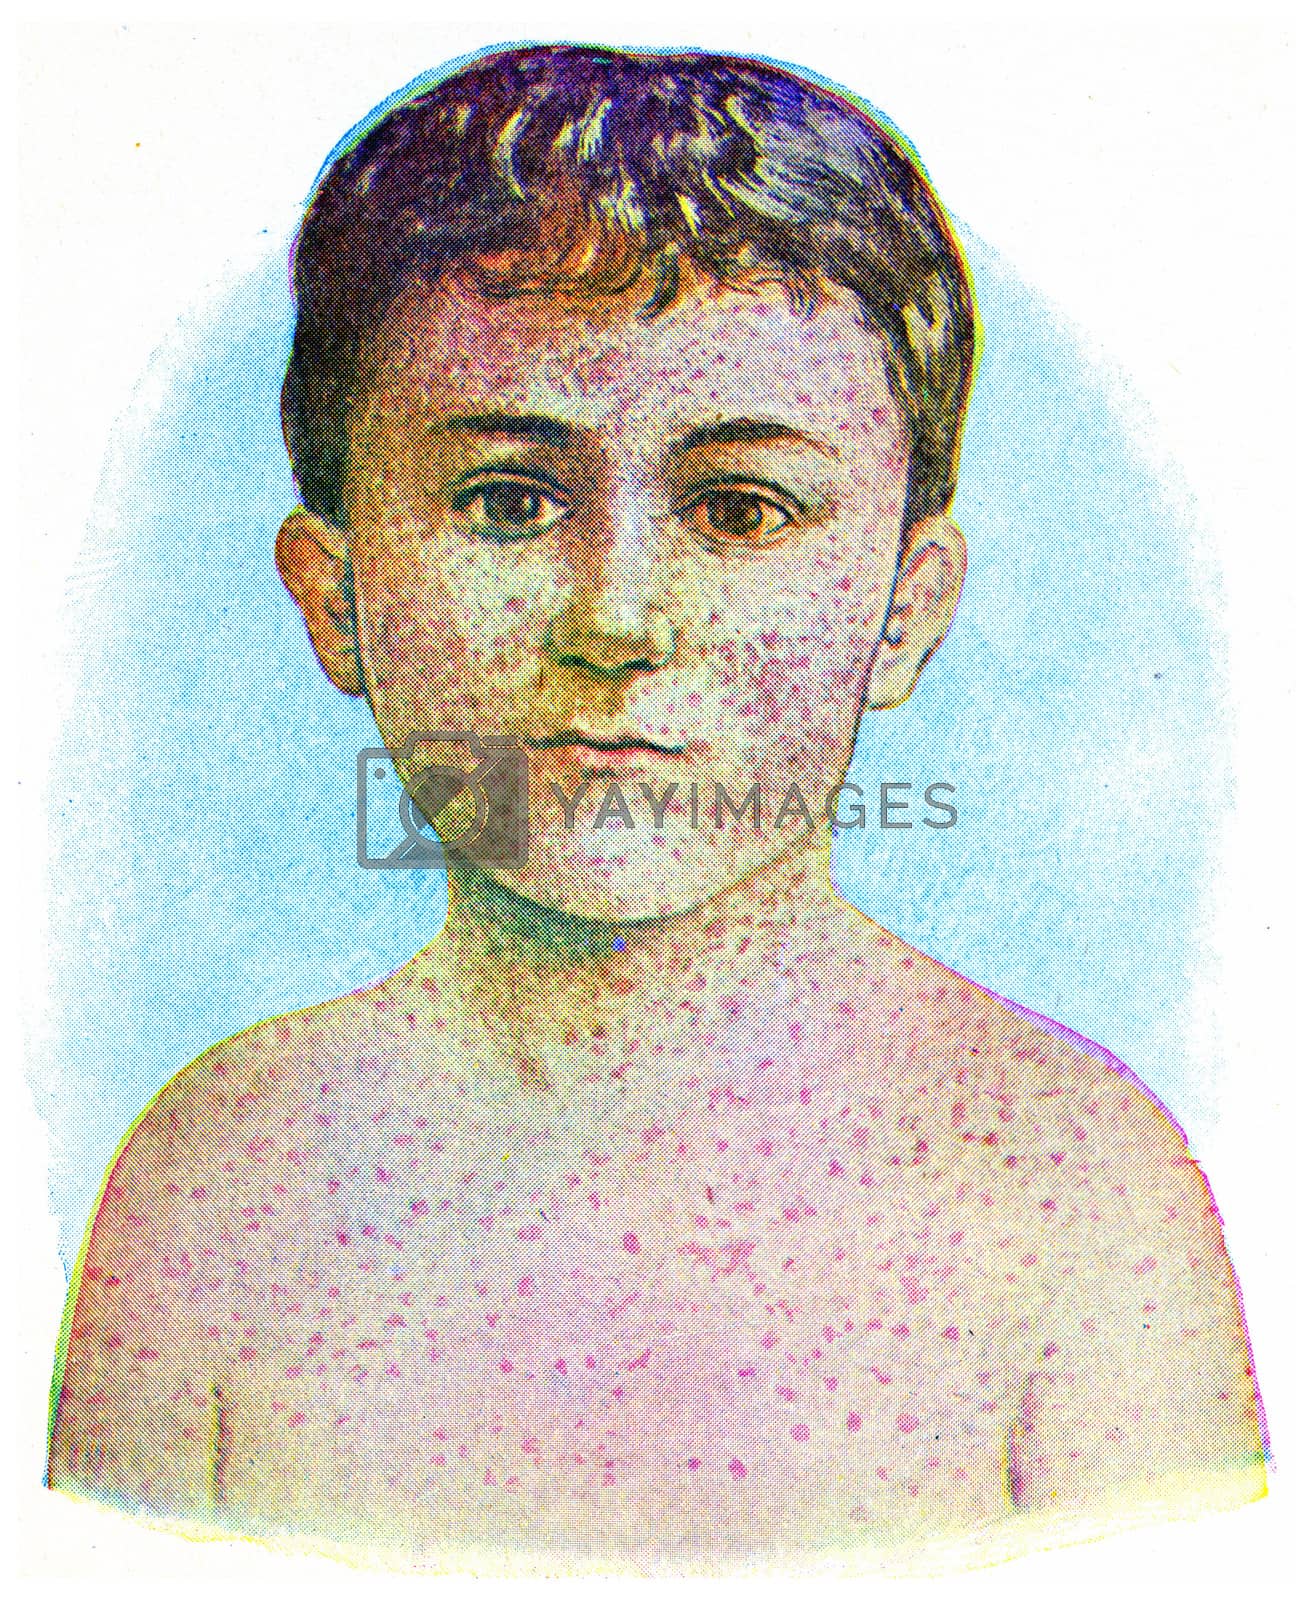 Royalty free image of Measles, vintage engraving. by Morphart